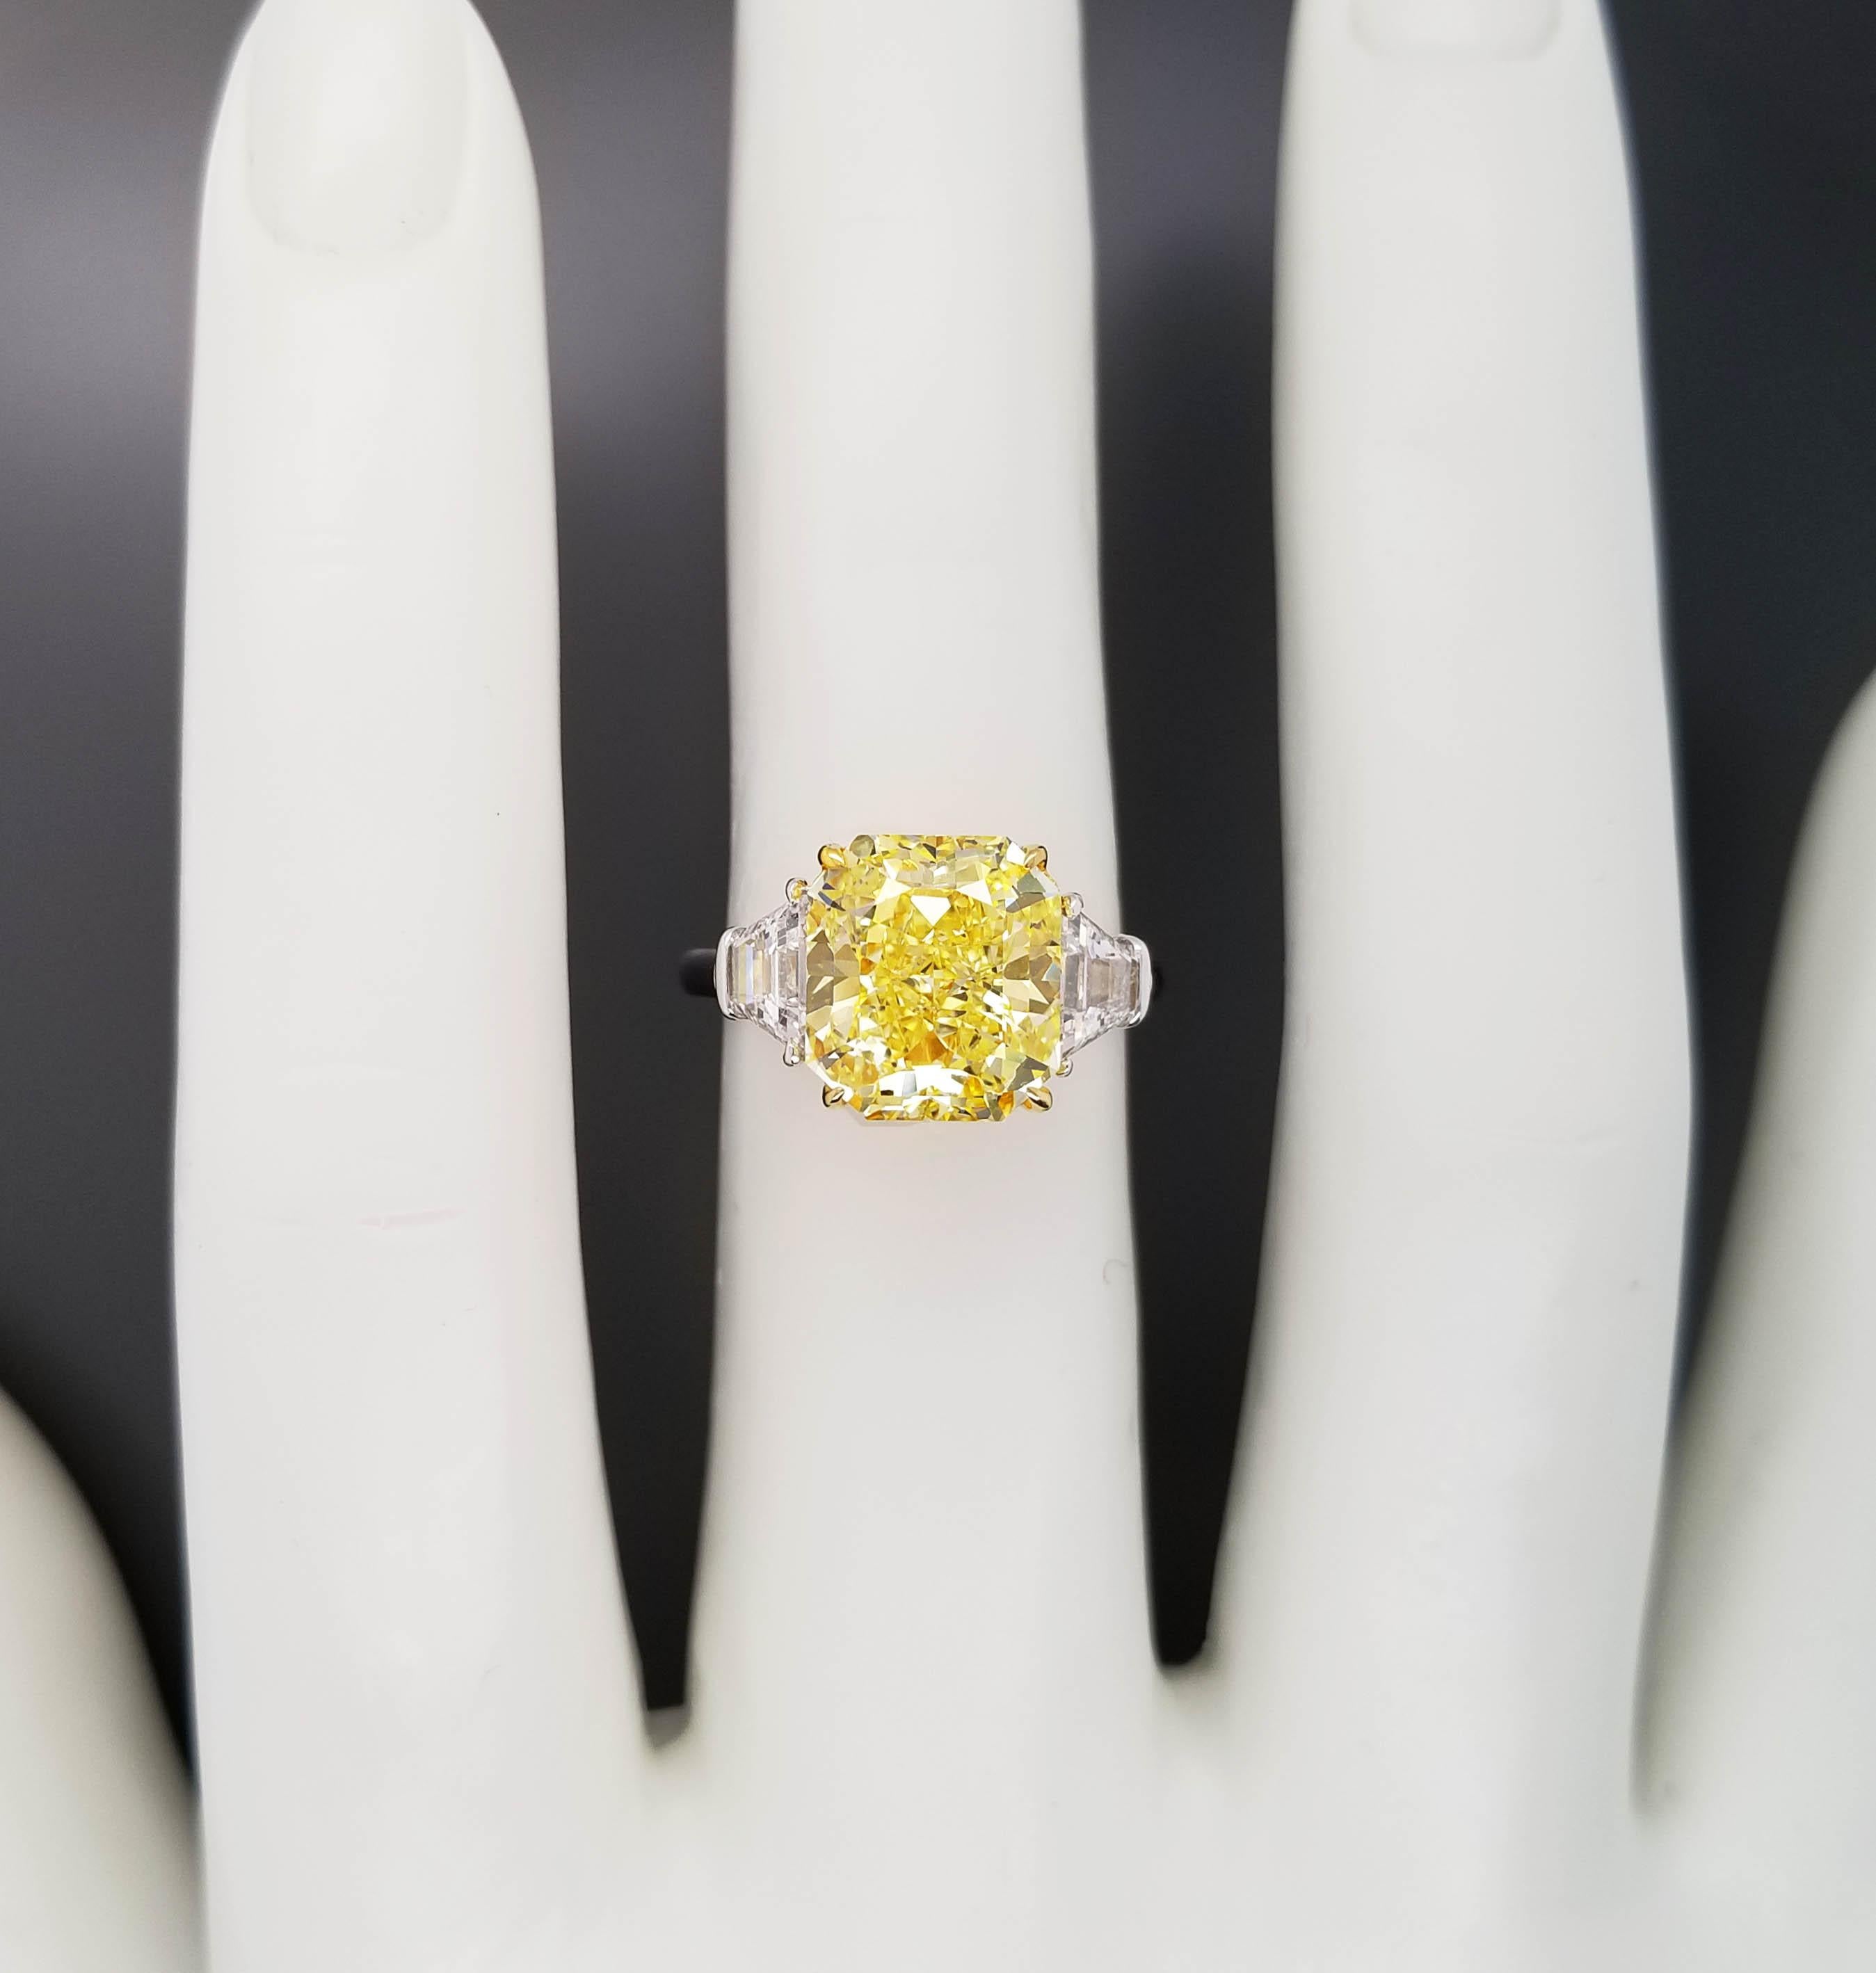 Radiant Cut Scarselli 5 Carat Fancy Intense Yellow Diamond Ring in Platinum